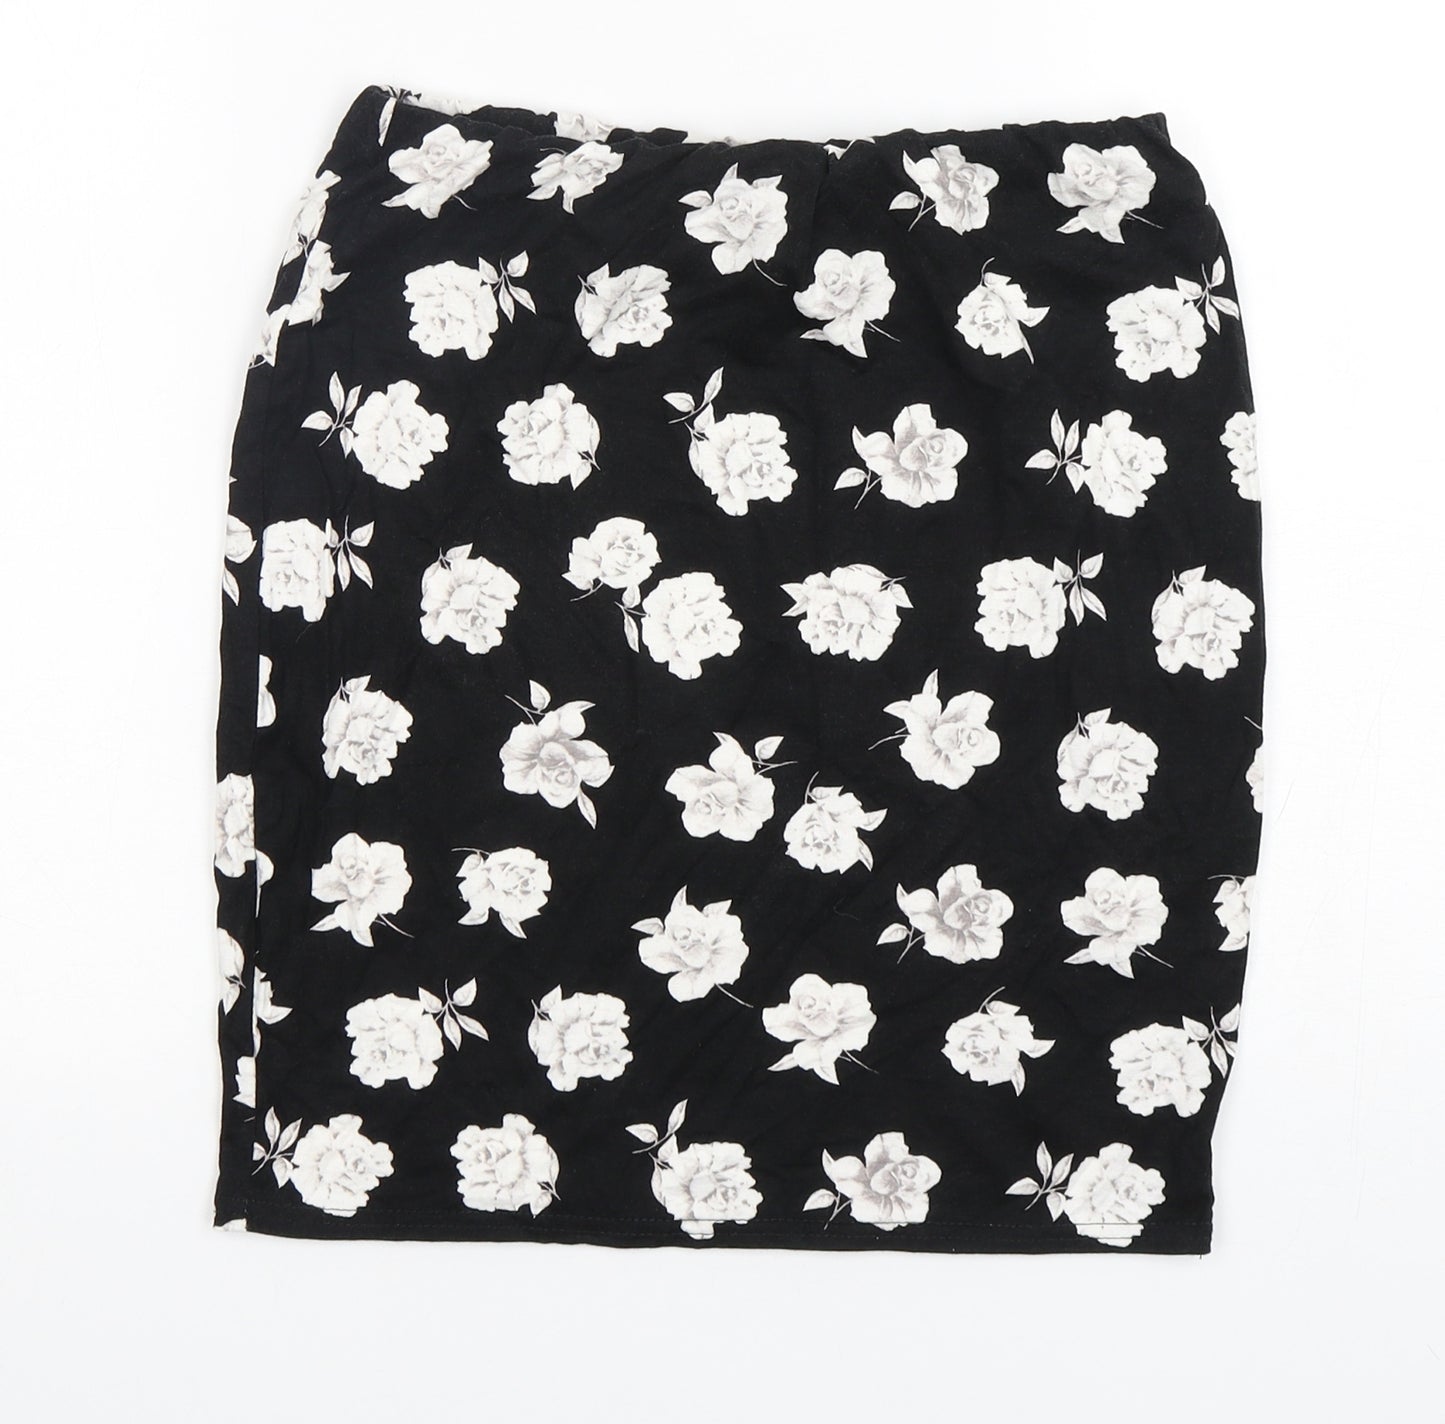 New Look Girls Black Floral Polyester Mini Skirt Size 12-13 Years  Regular